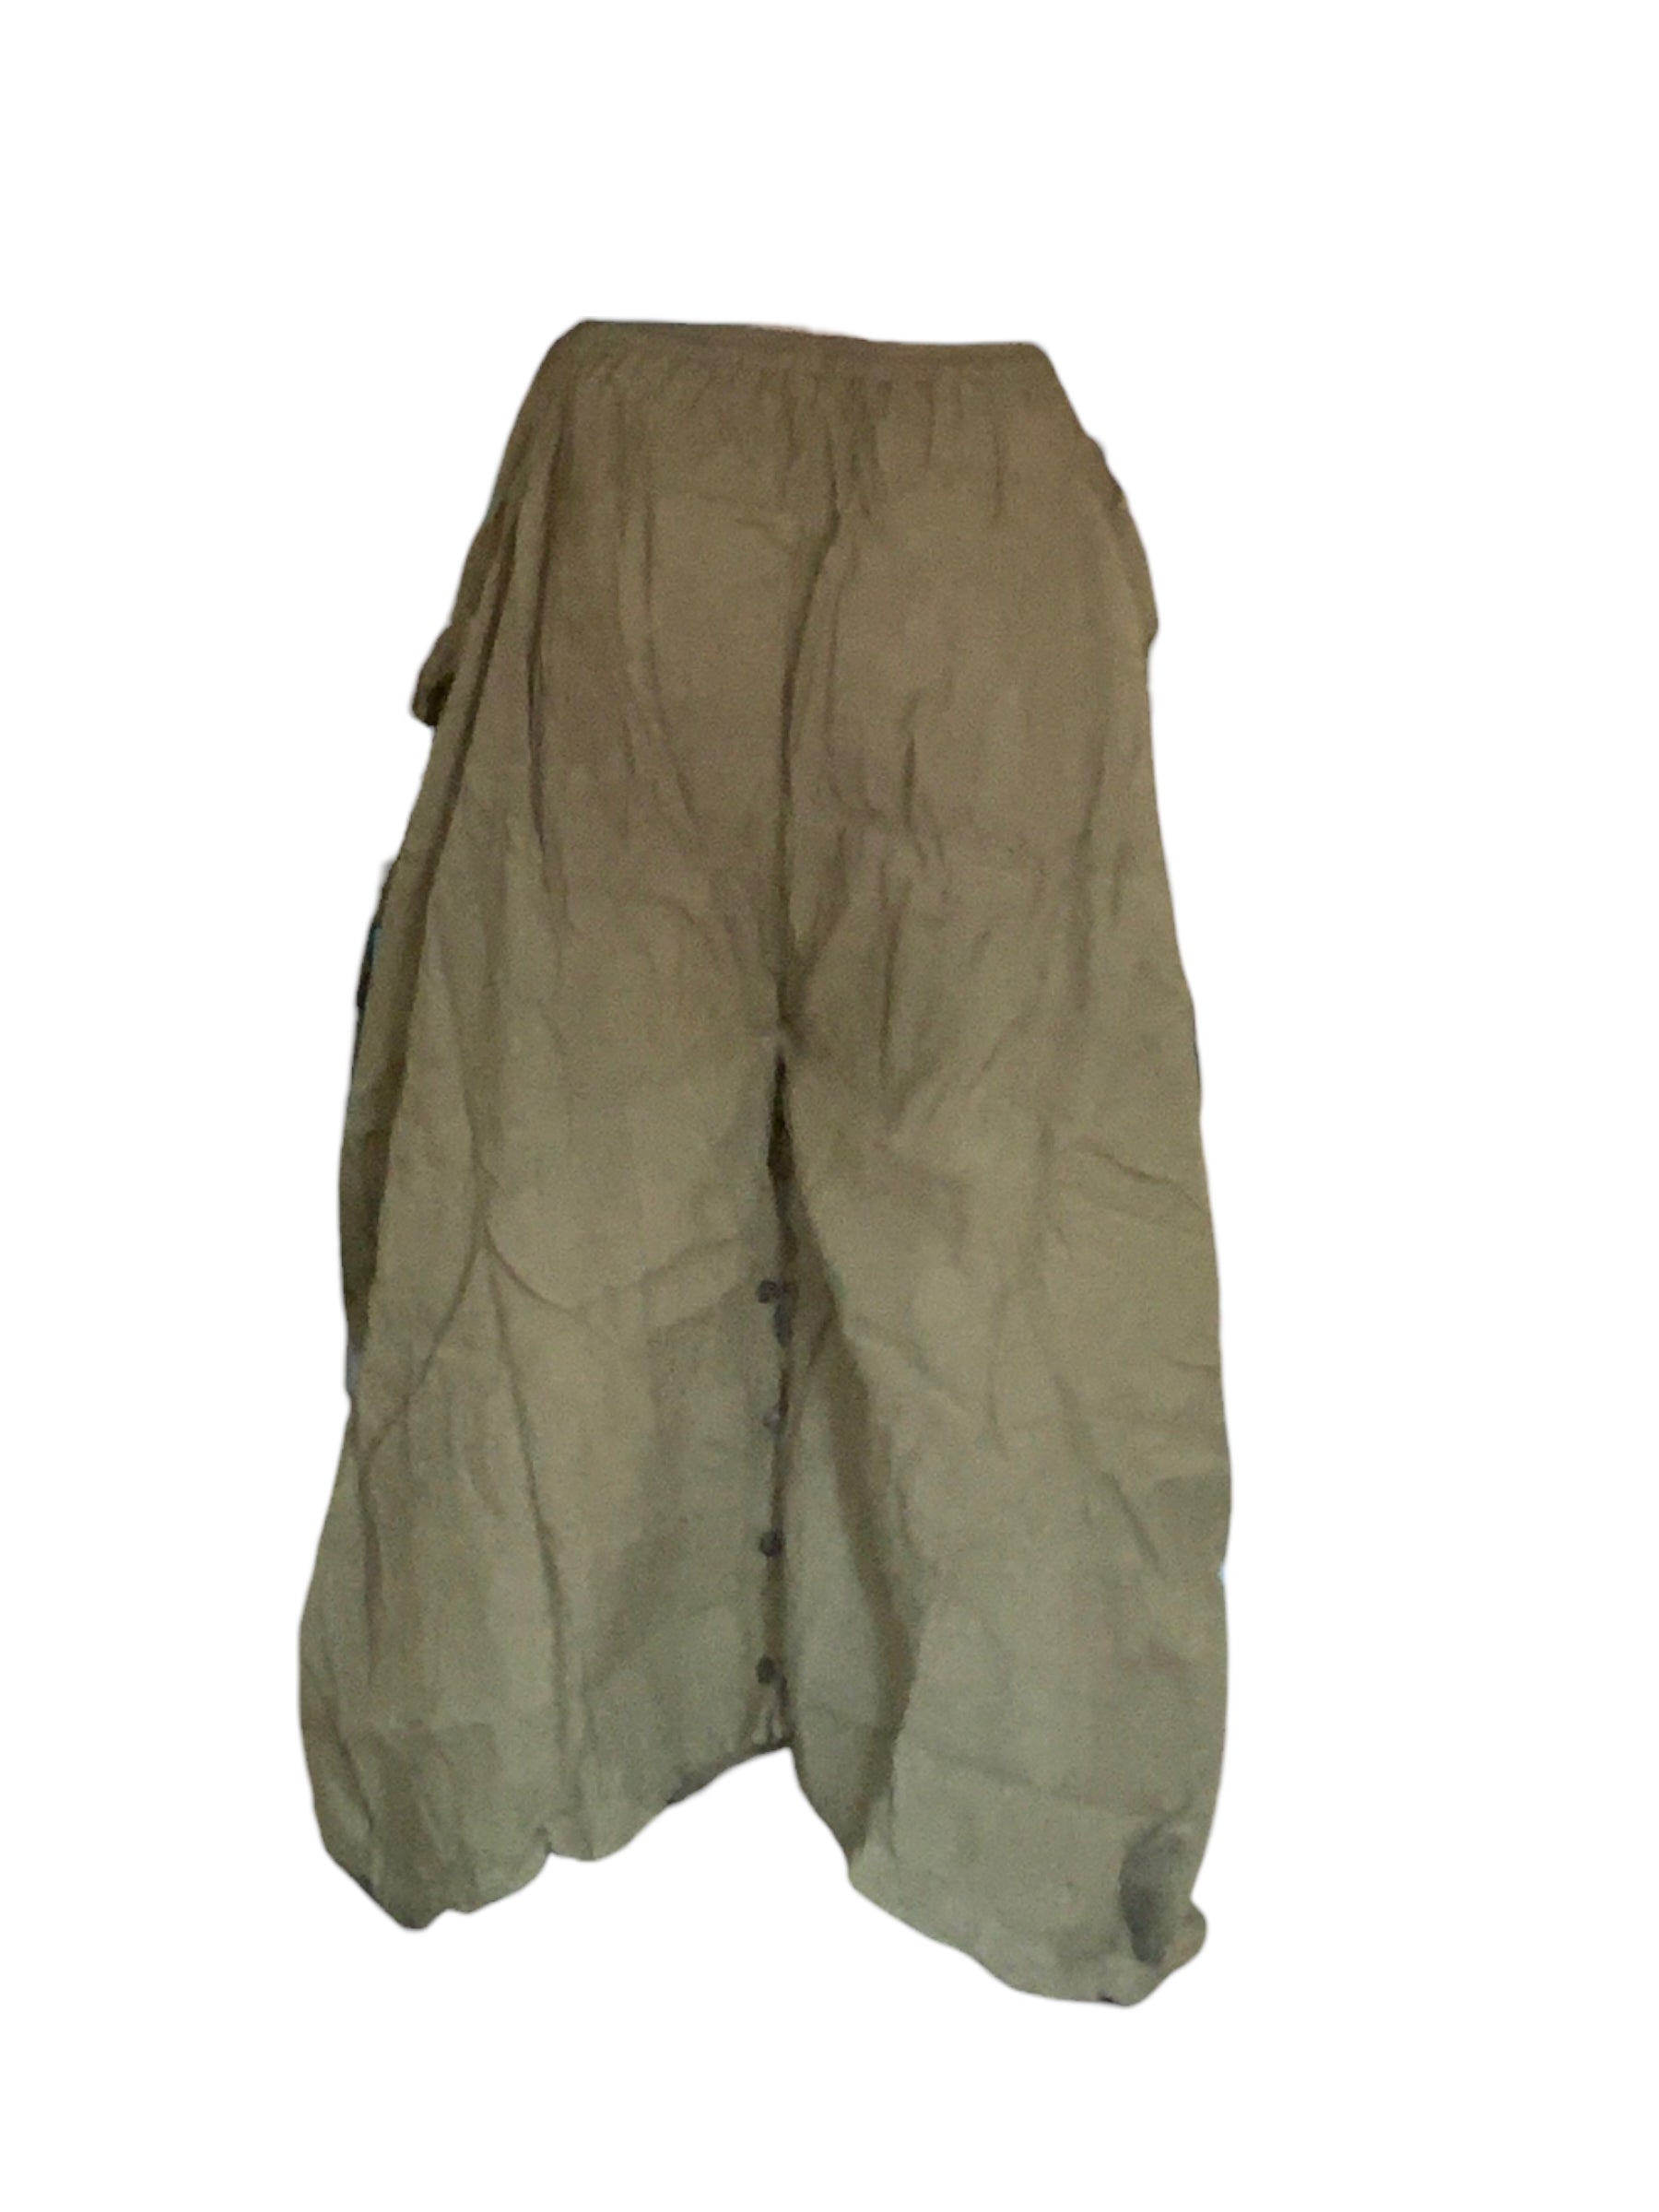 Olive Cotton Voile Tashi Versatile Pants/Skirt